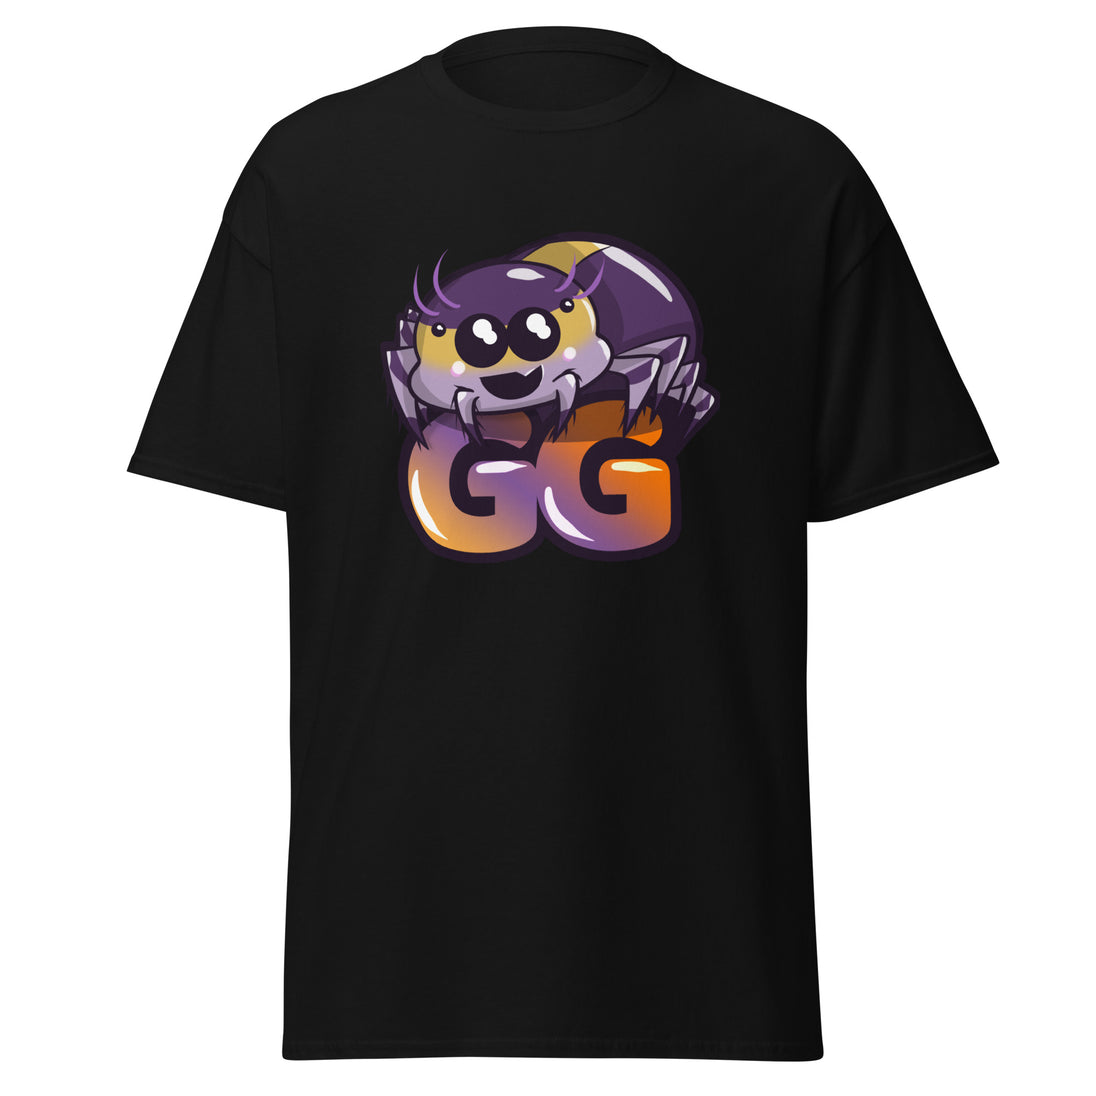 Purple Spider GG Gamer/Streamer T-Shirt - Soft, Comfy, and Stylish